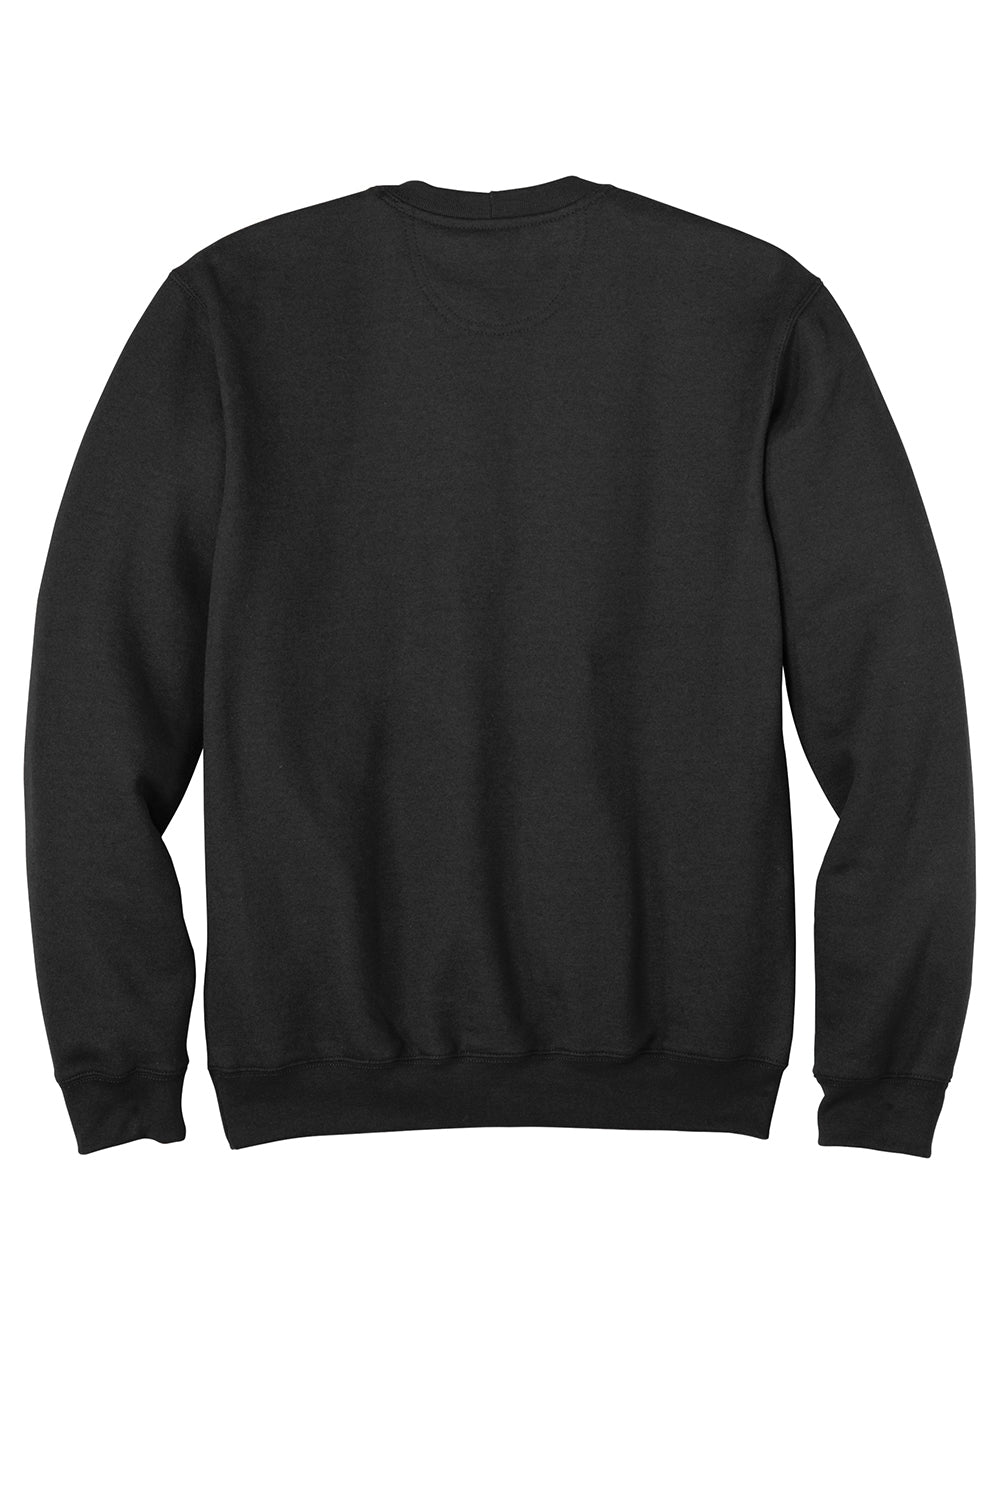 Carhartt CTK124 Mens Crewneck Sweatshirt Black Flat Back